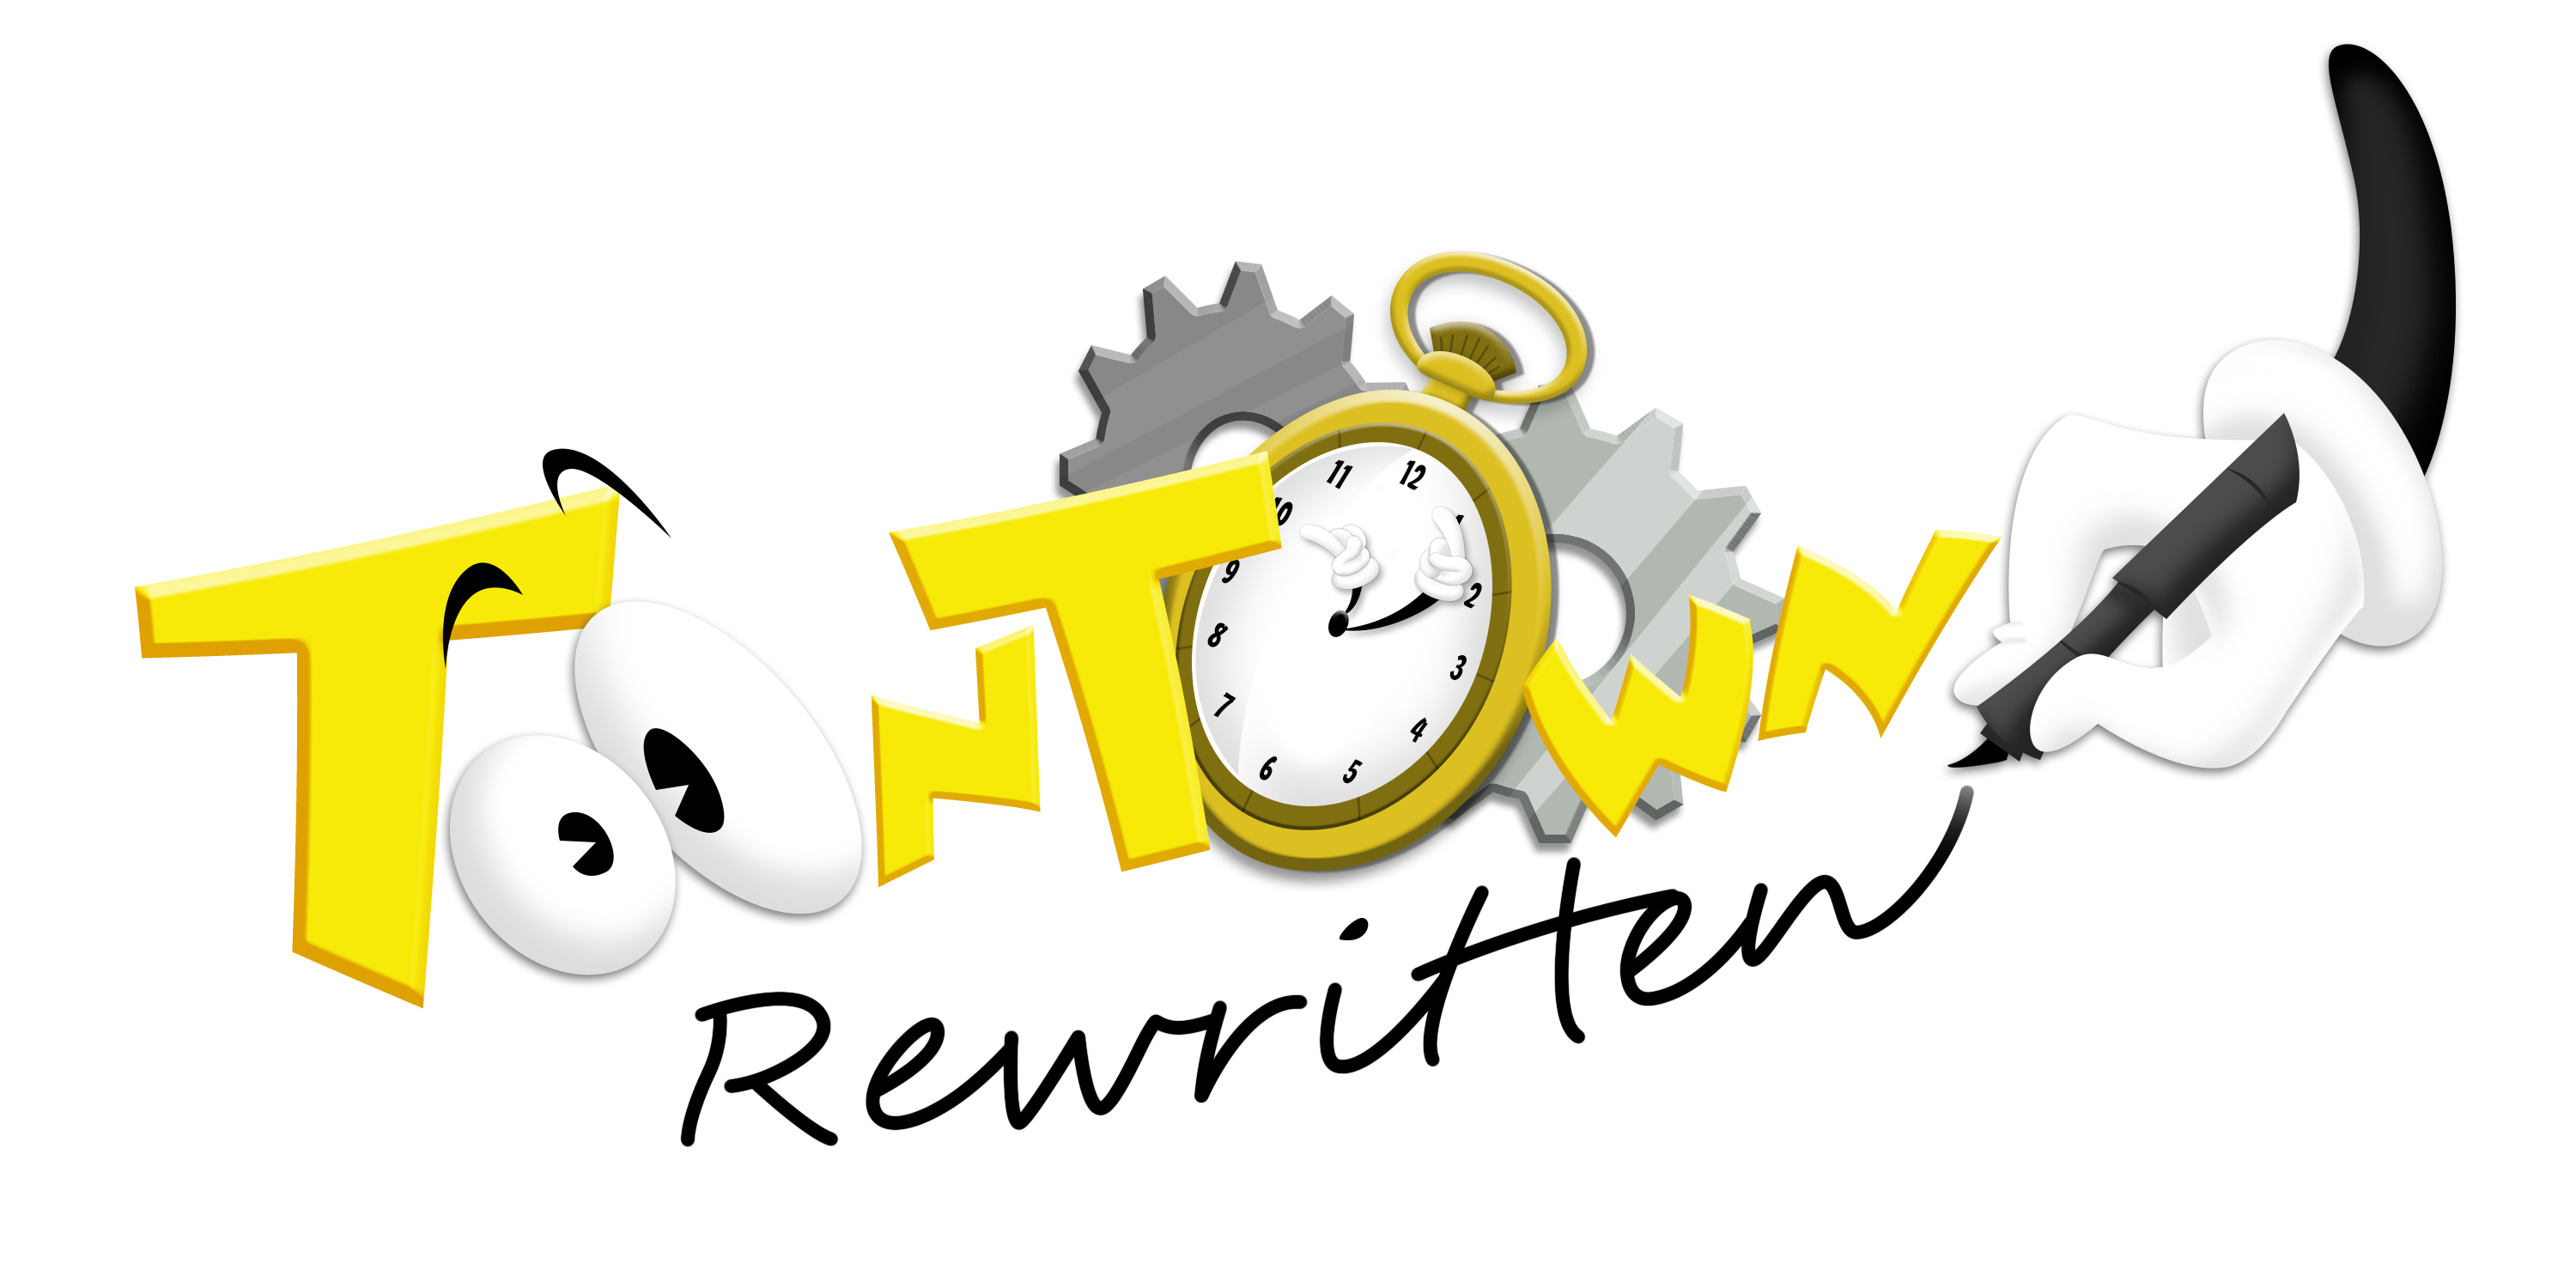 The Open Beta logo of Toontown Rewritten.